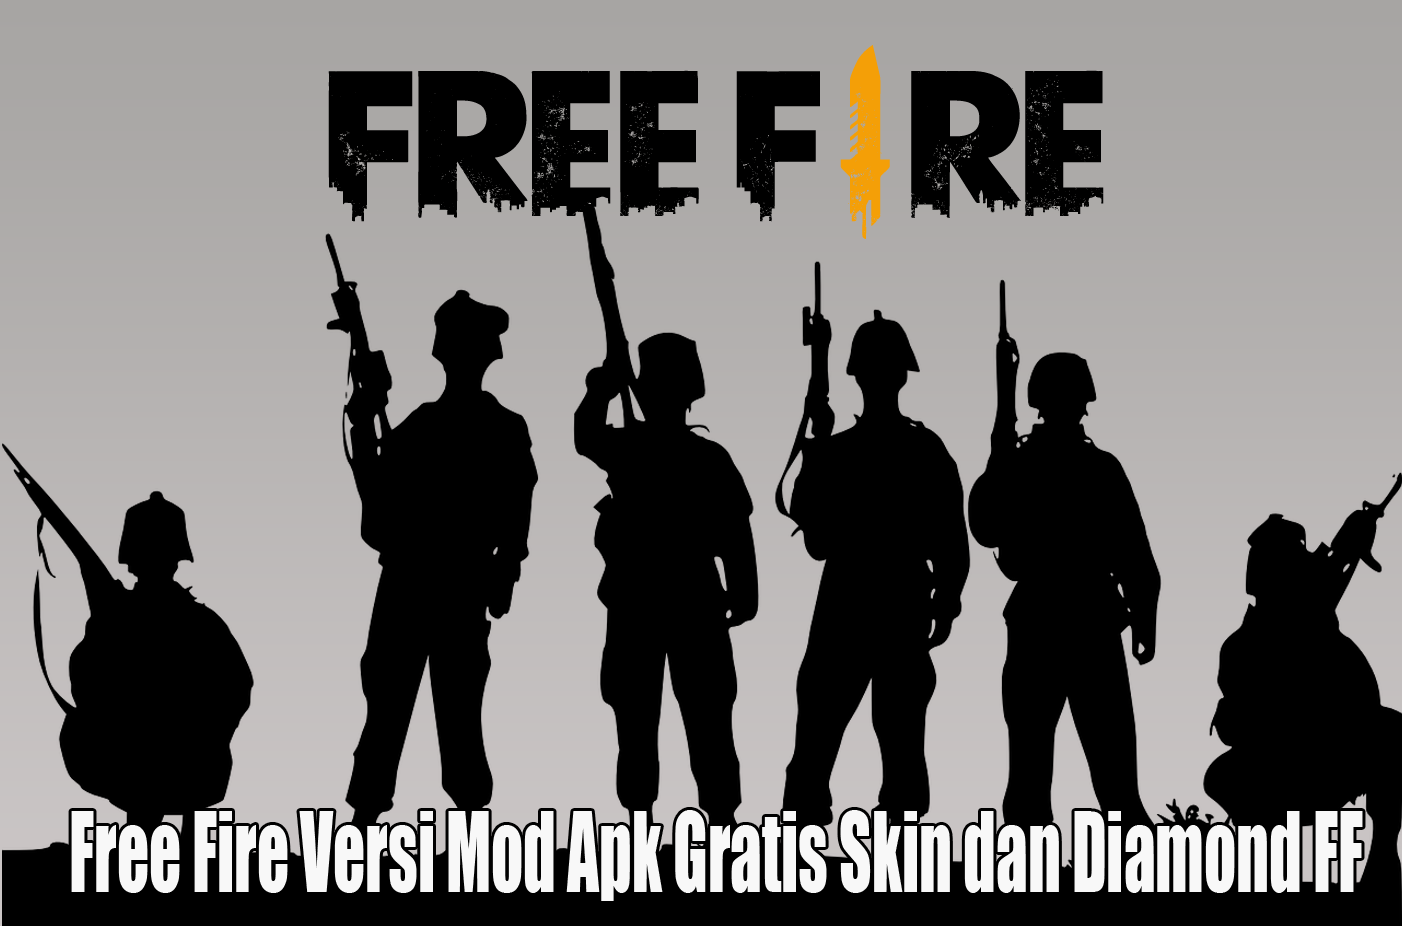 Free Fire Versi Mod Apk Gratis Skin dan Diamond FF